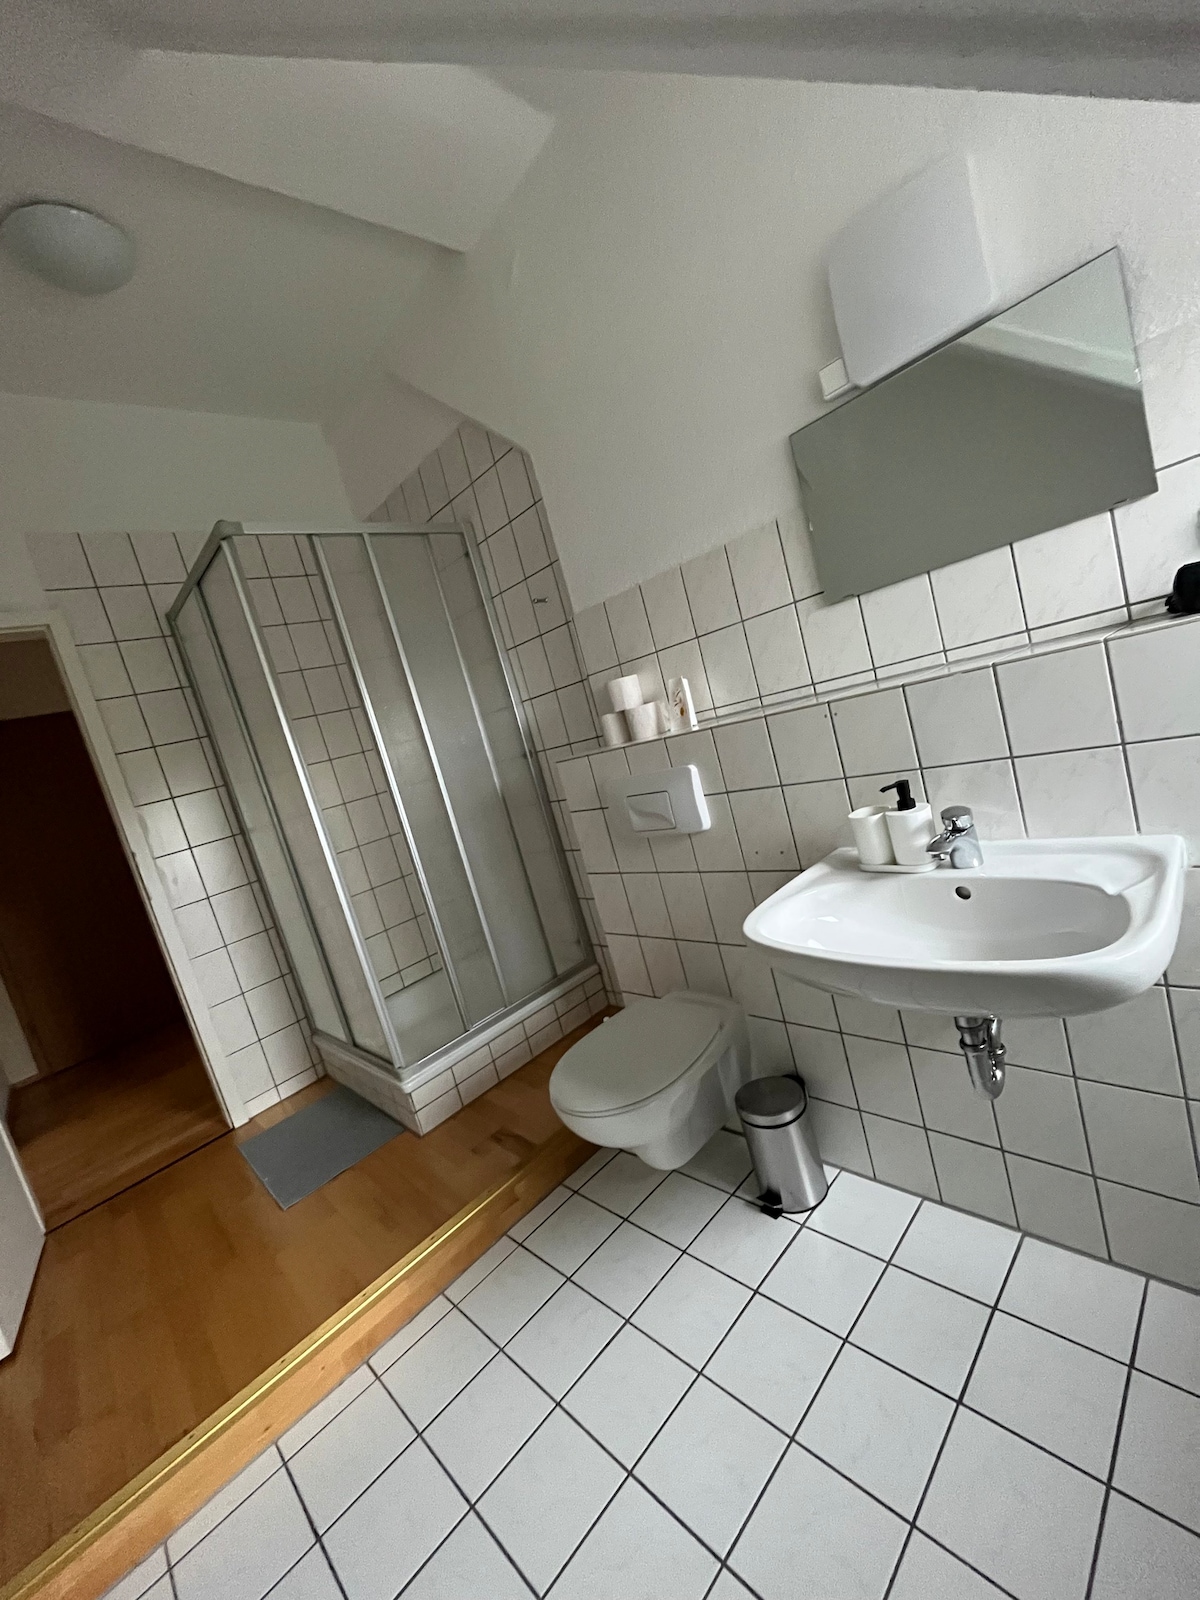 Braunschweig旁边有浴室的独立房间(17)